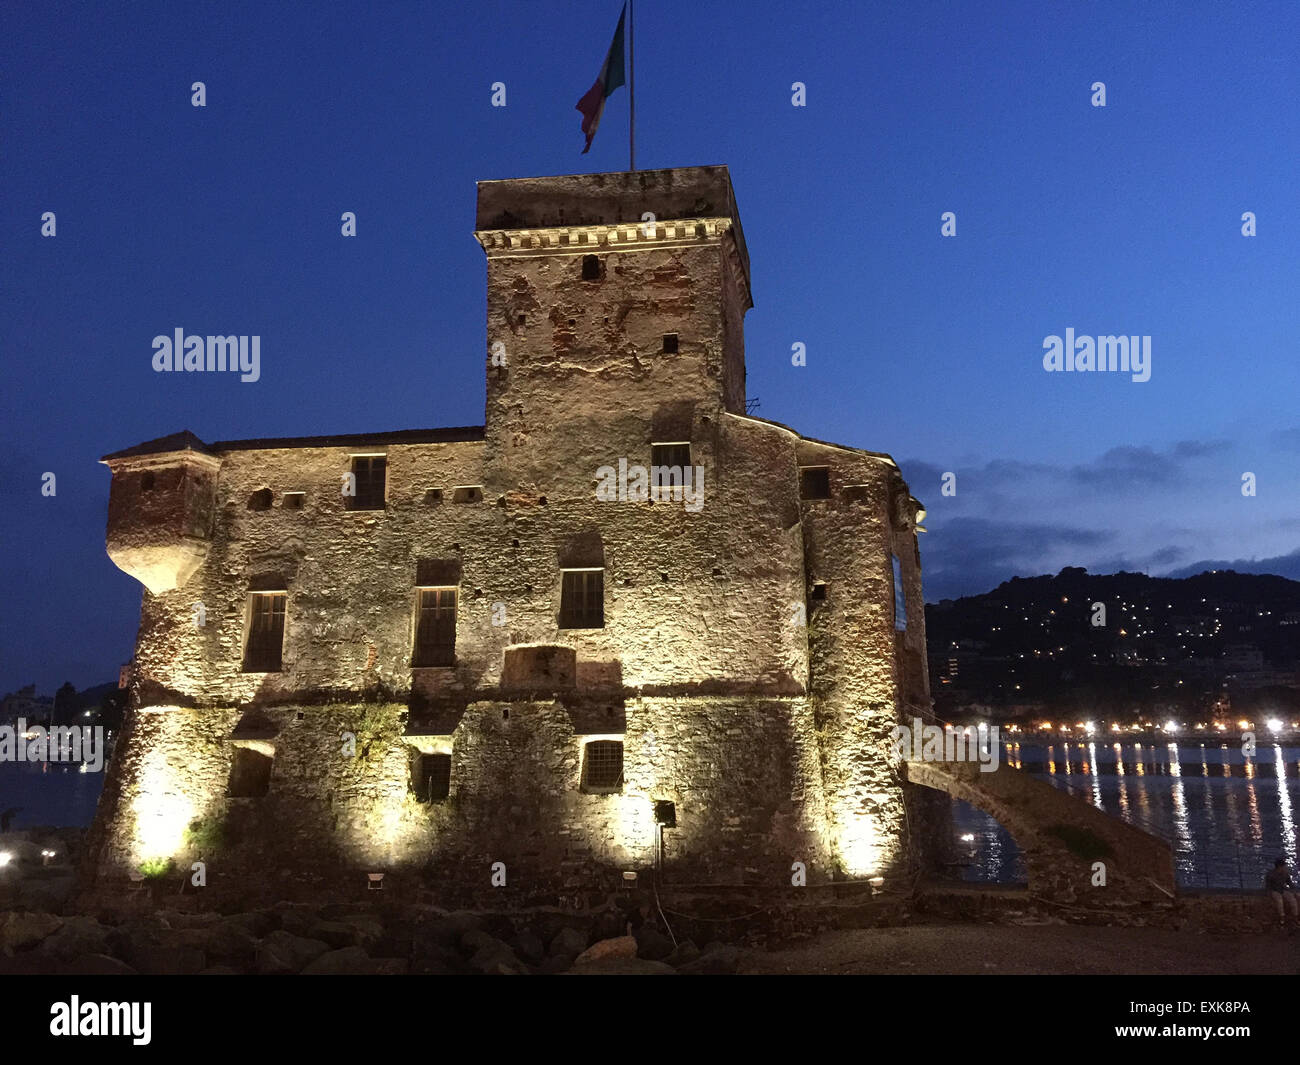 RAPALLO, Ligurien, Nord-West-Italien. Das Castello Sul Mare (Schloss am Meer) im Jahre 1551 gebaut. Foto Tony Gale Stockfoto